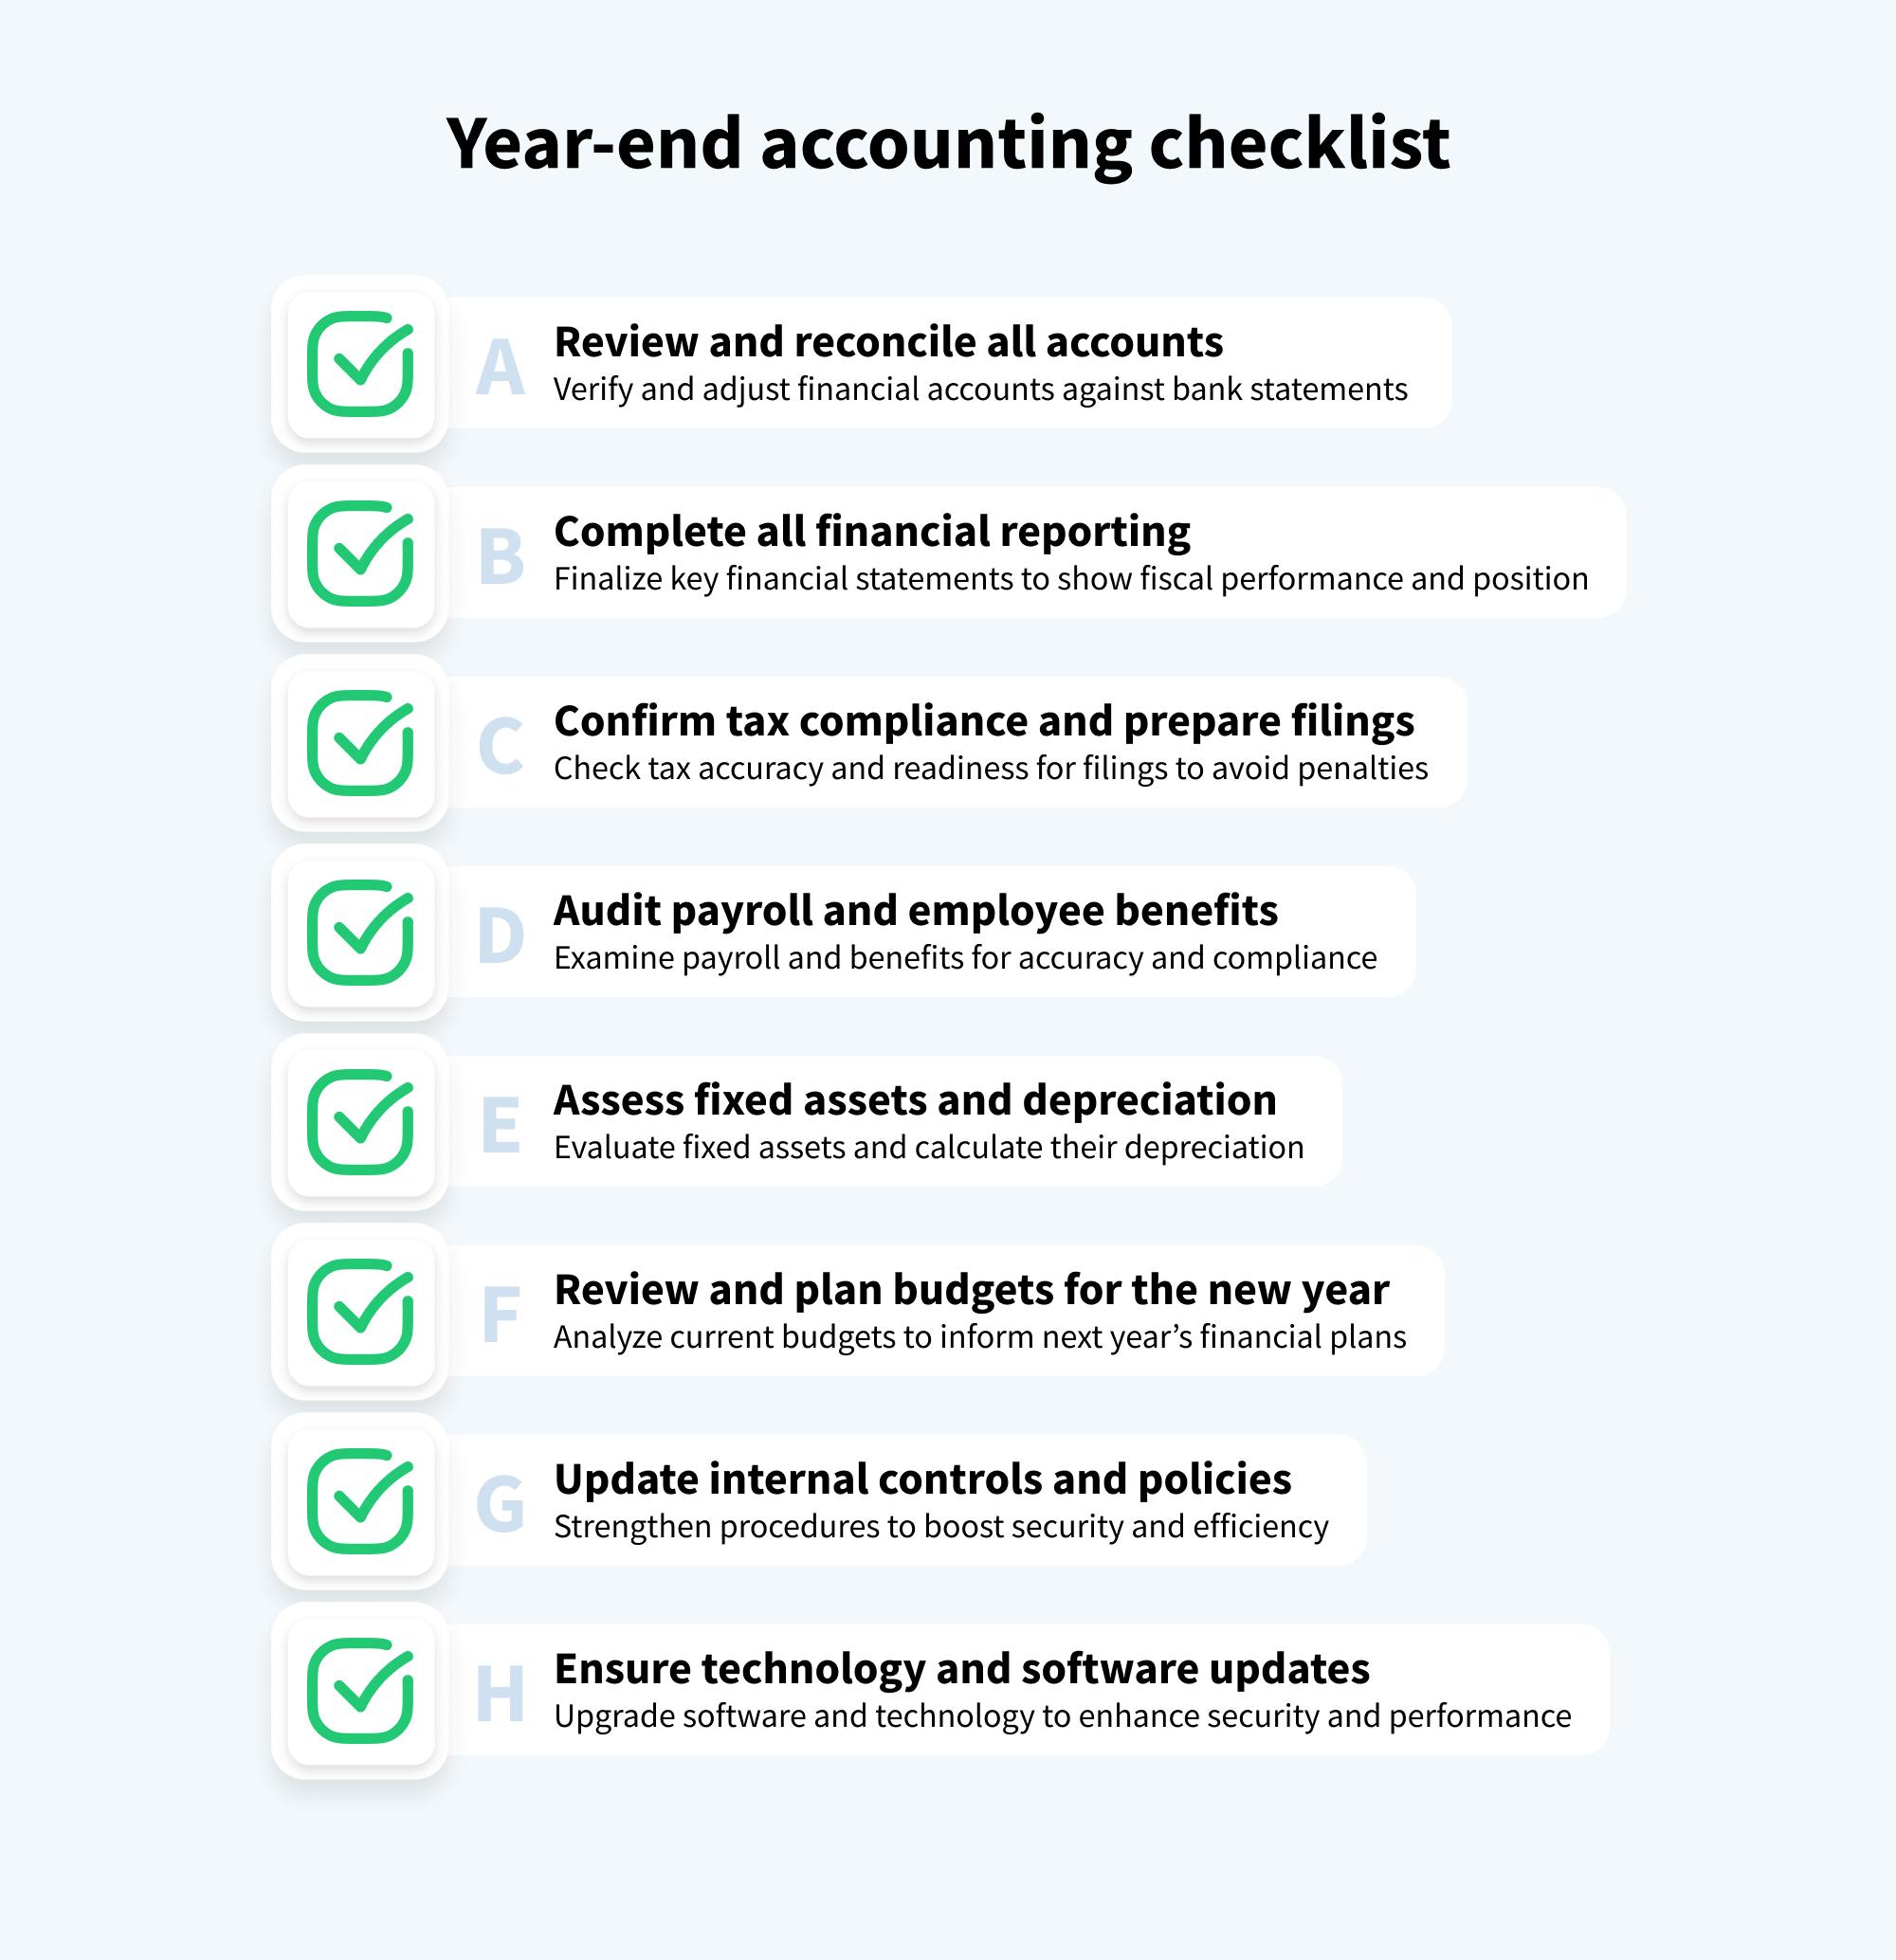 Year-end accounting checklist